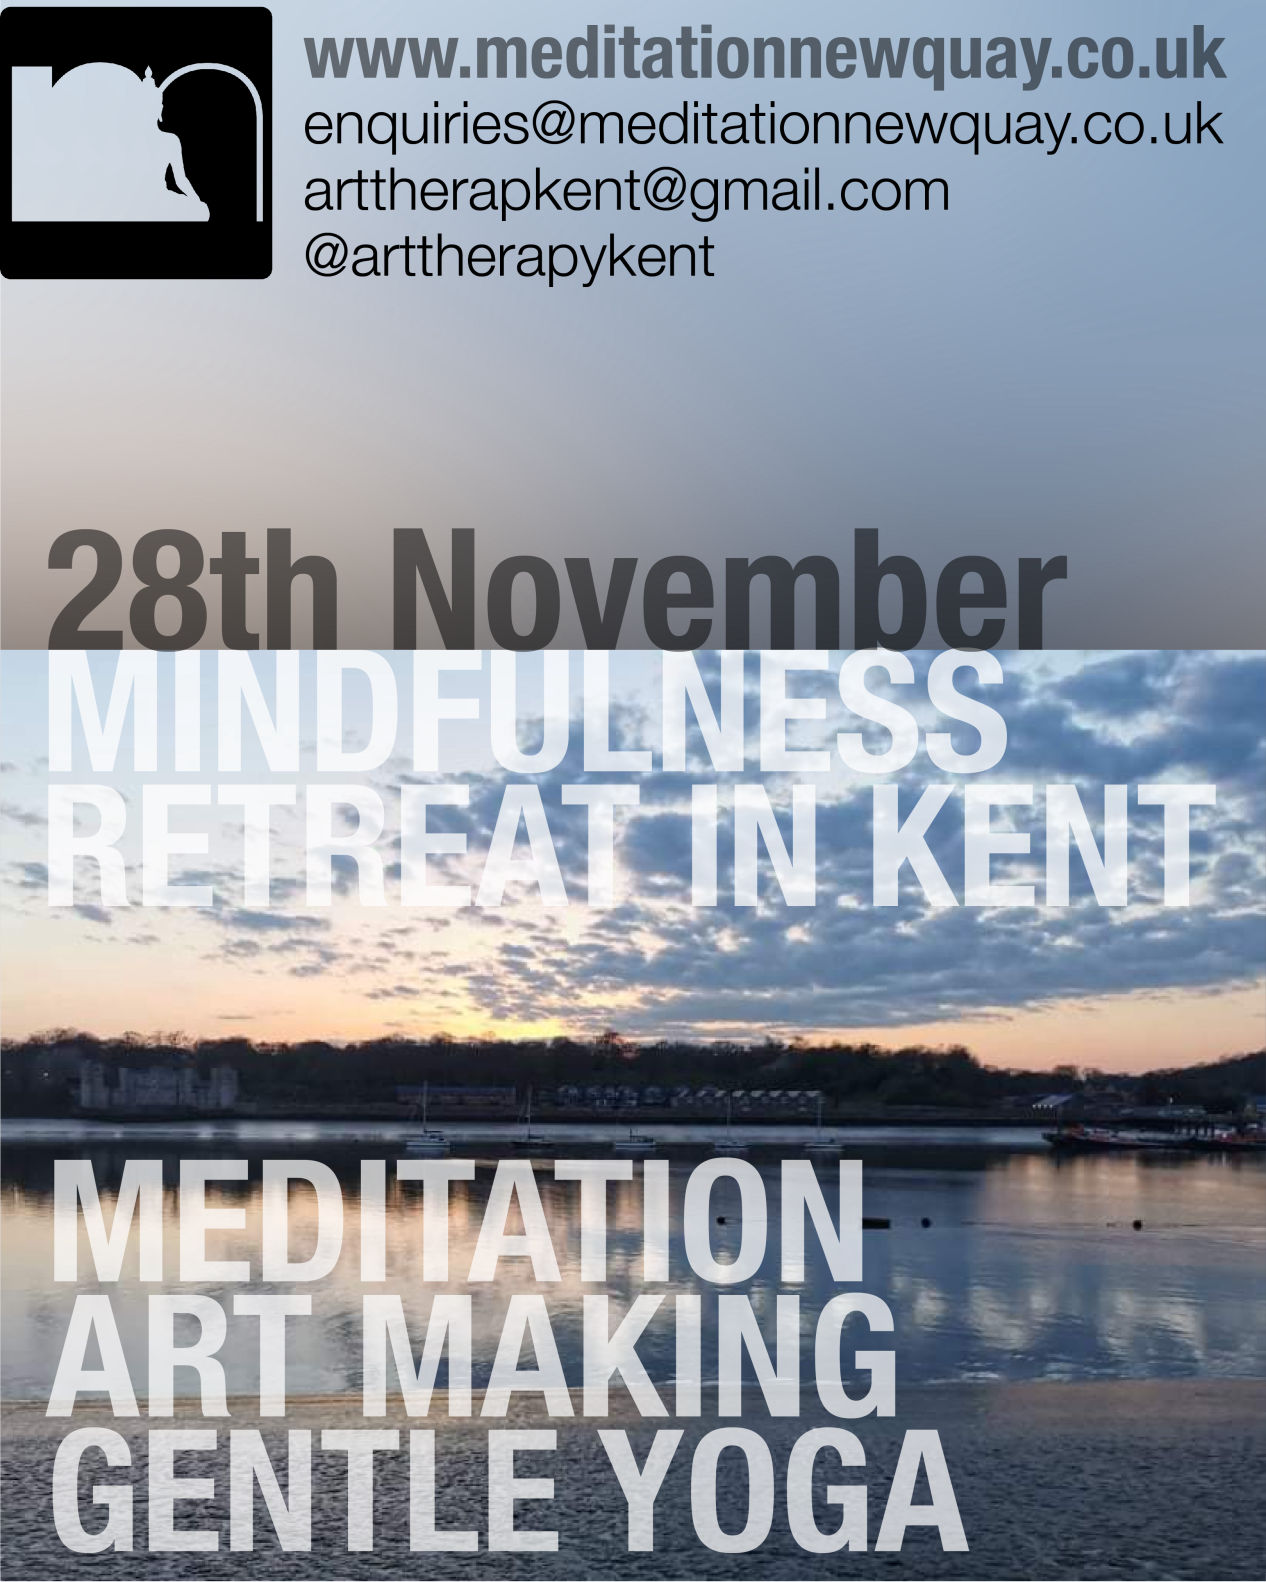 andreas karaiskos business communications through design website and graphic design Meditation Newquay Instagram Post